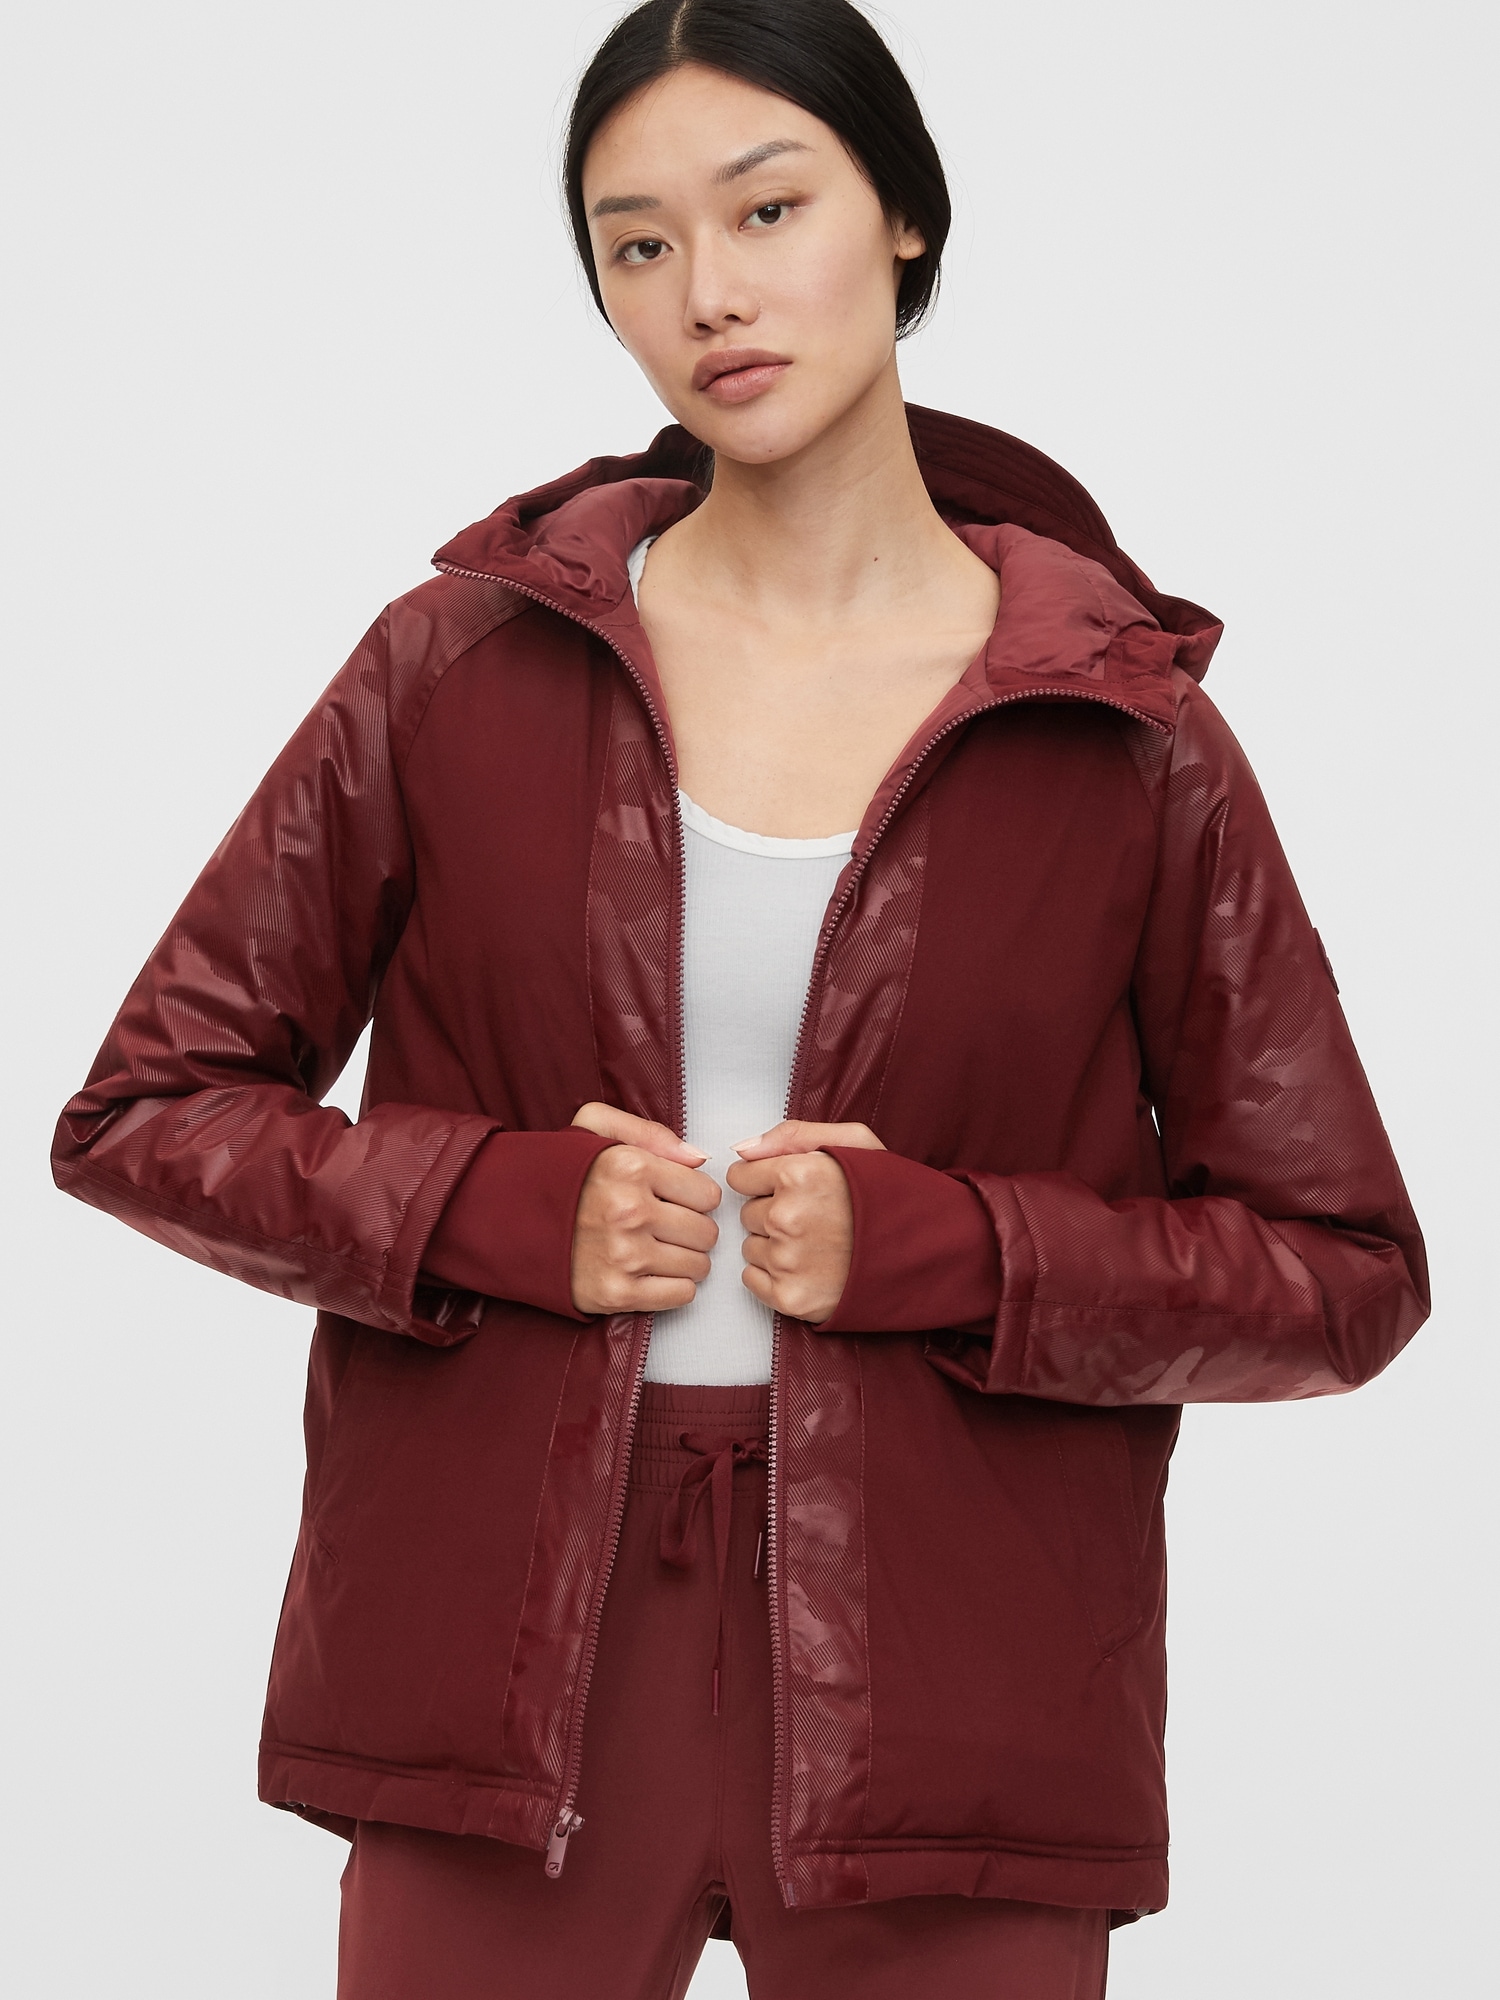 gap primaloft women's jacket